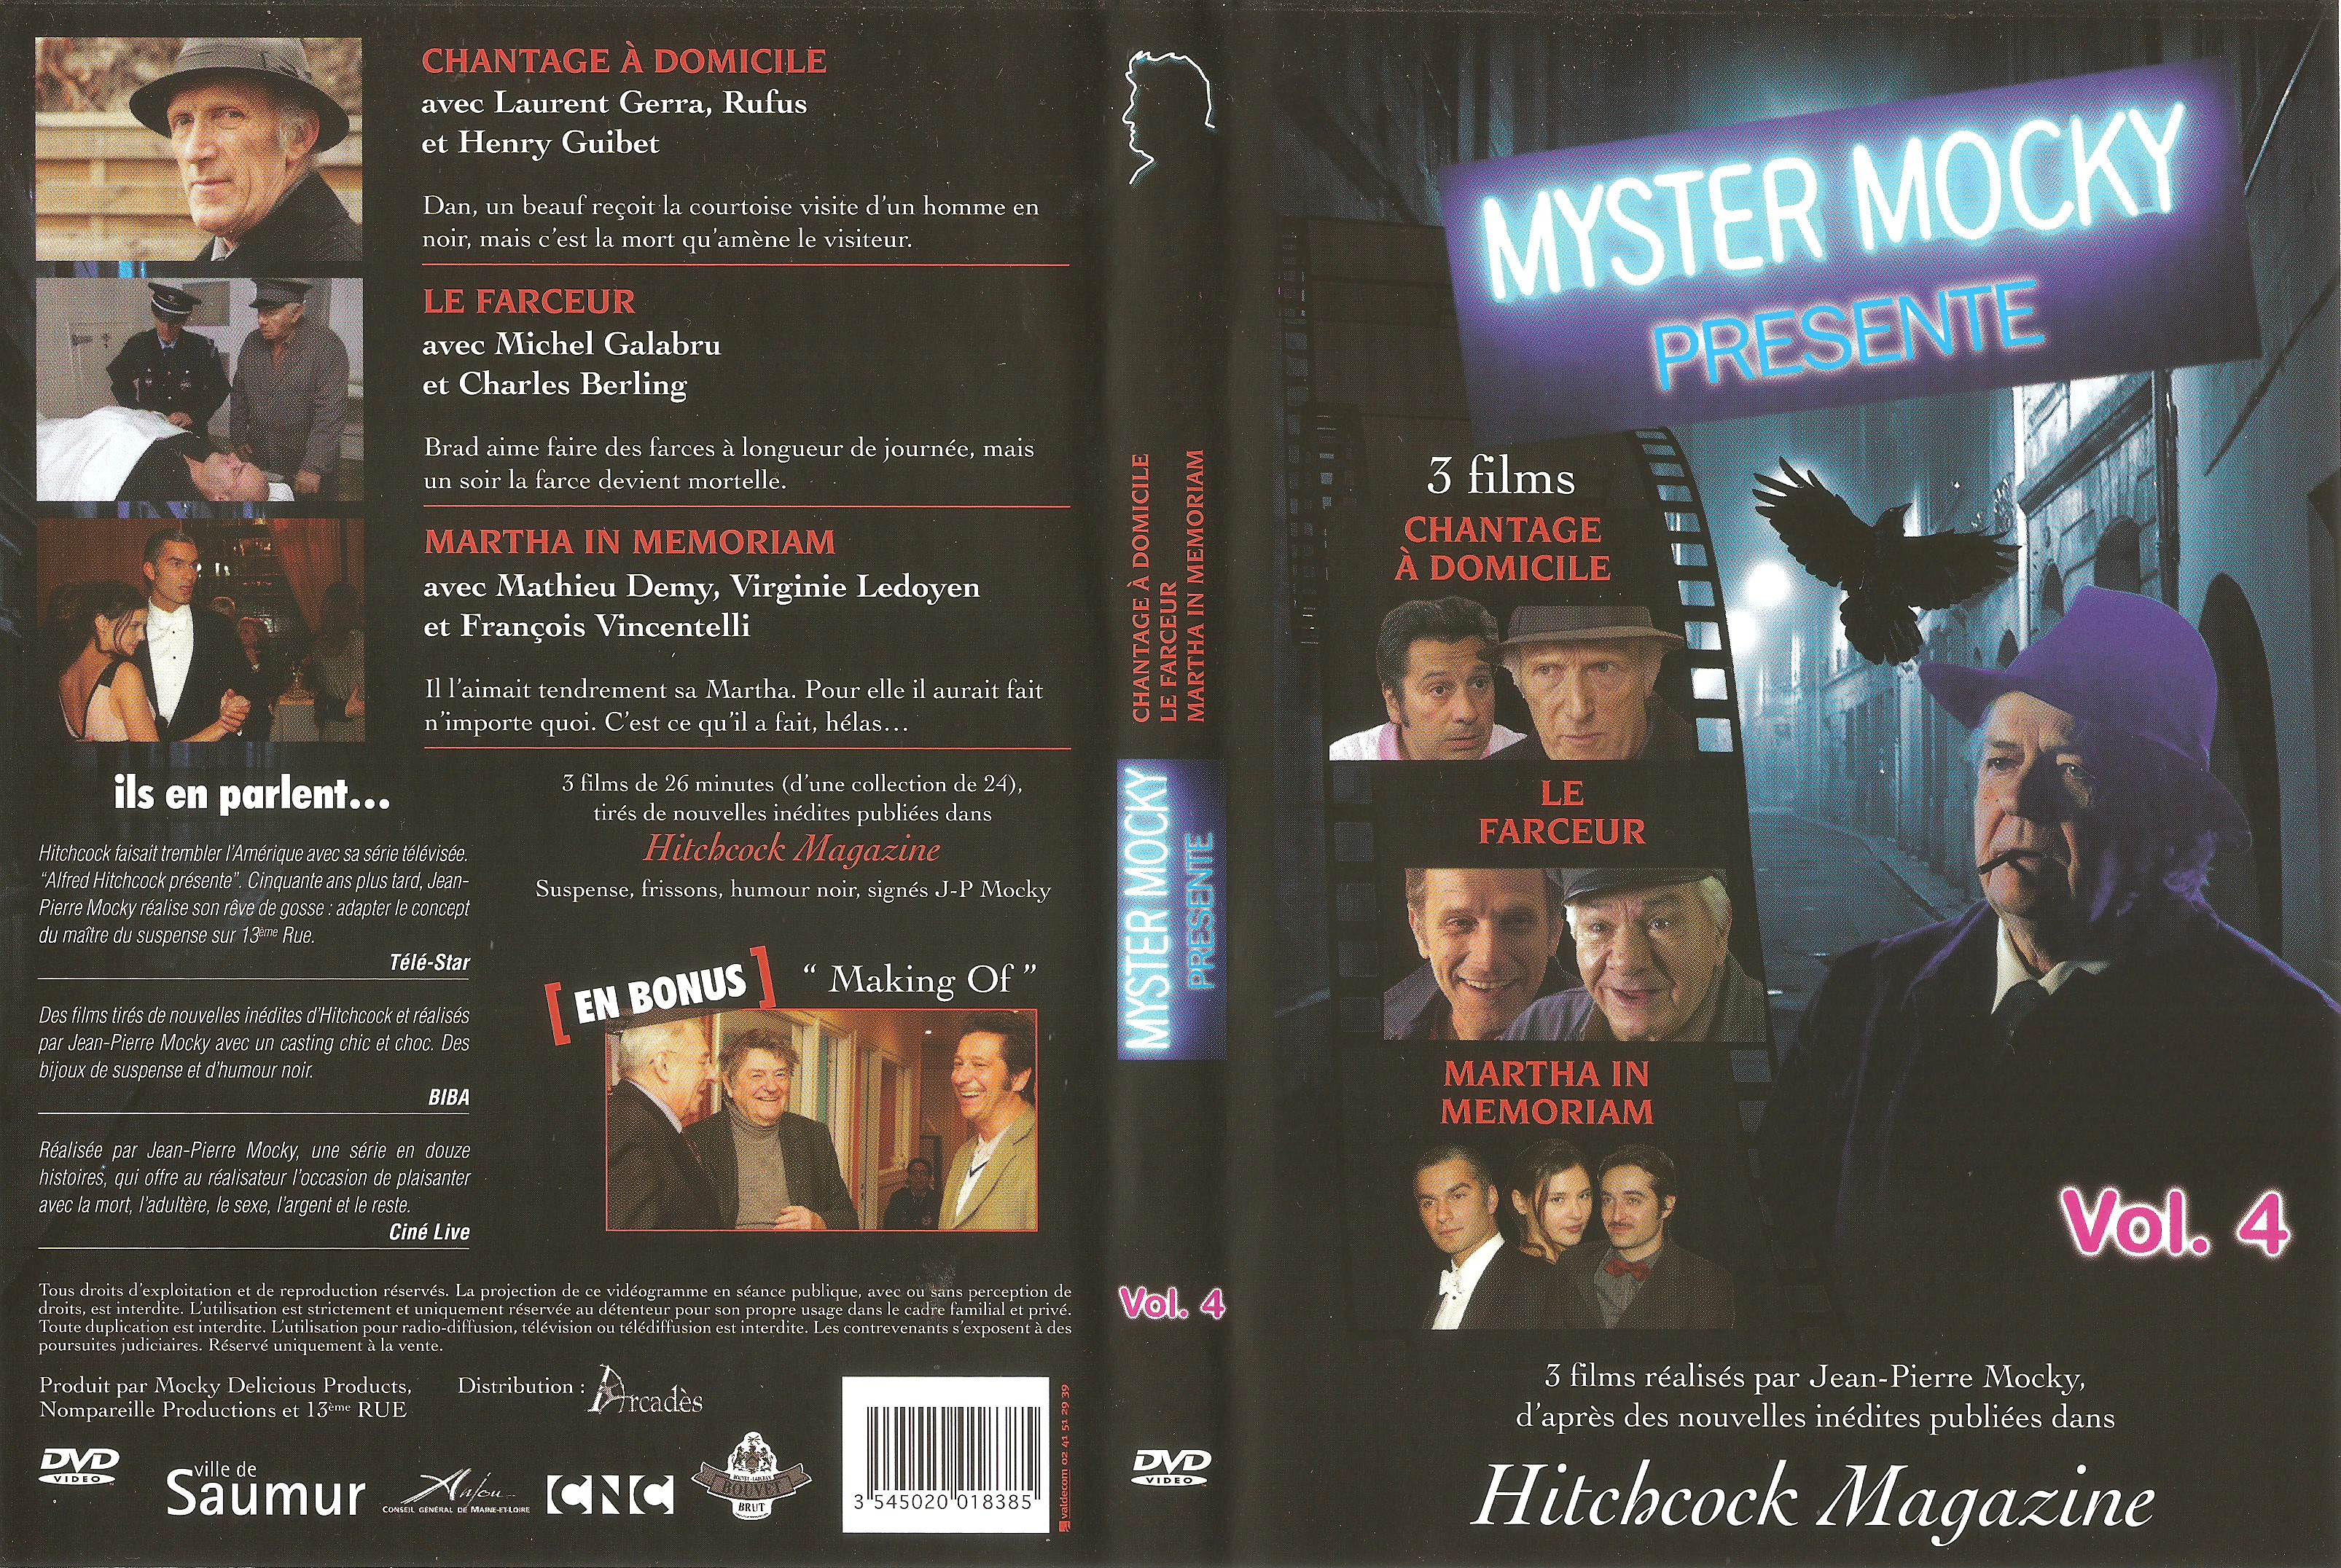 Jaquette DVD Myster Mocky prsente Vol 04